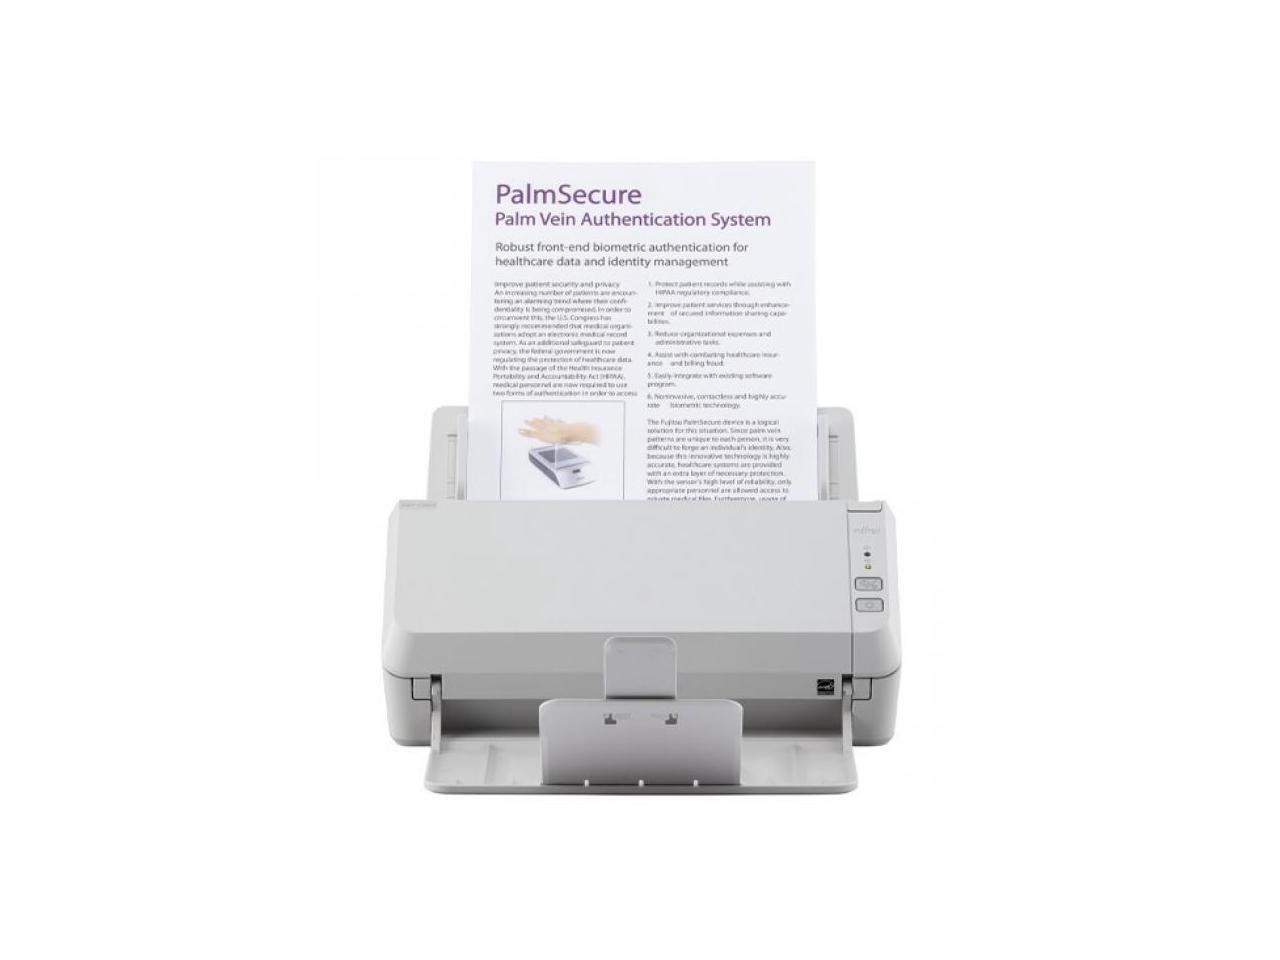 Fujitsu Image Scanner SP-1130N PA03811-B025 ADF (Automatic Document Feeder), Duplex Document Scanner